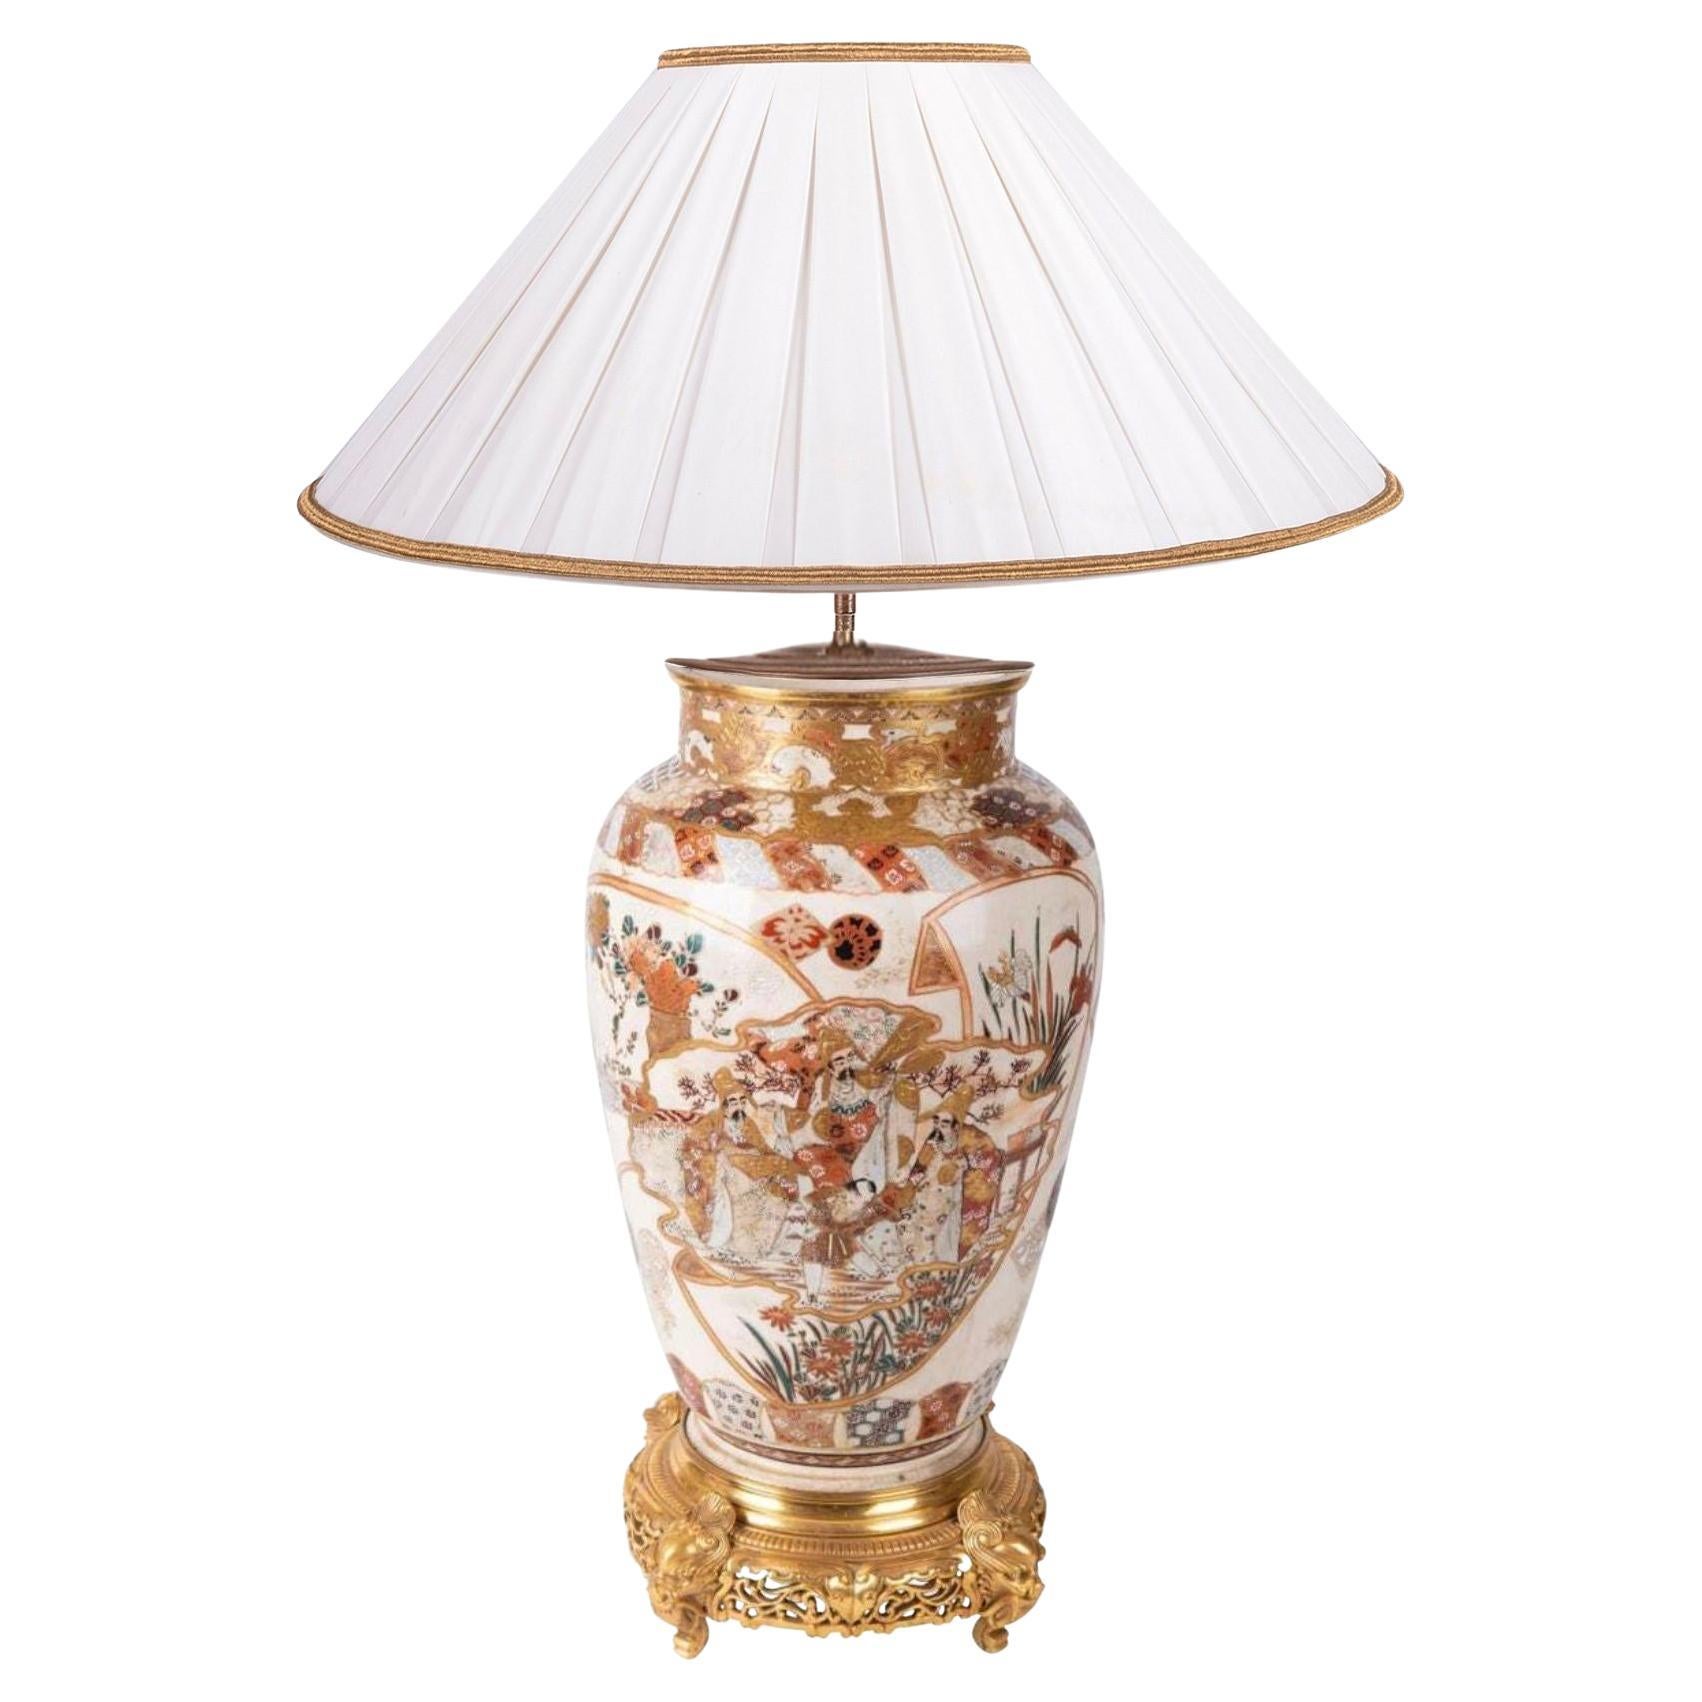 Satsuma-Vase oder Lampe aus dem 19. Jahrhundert